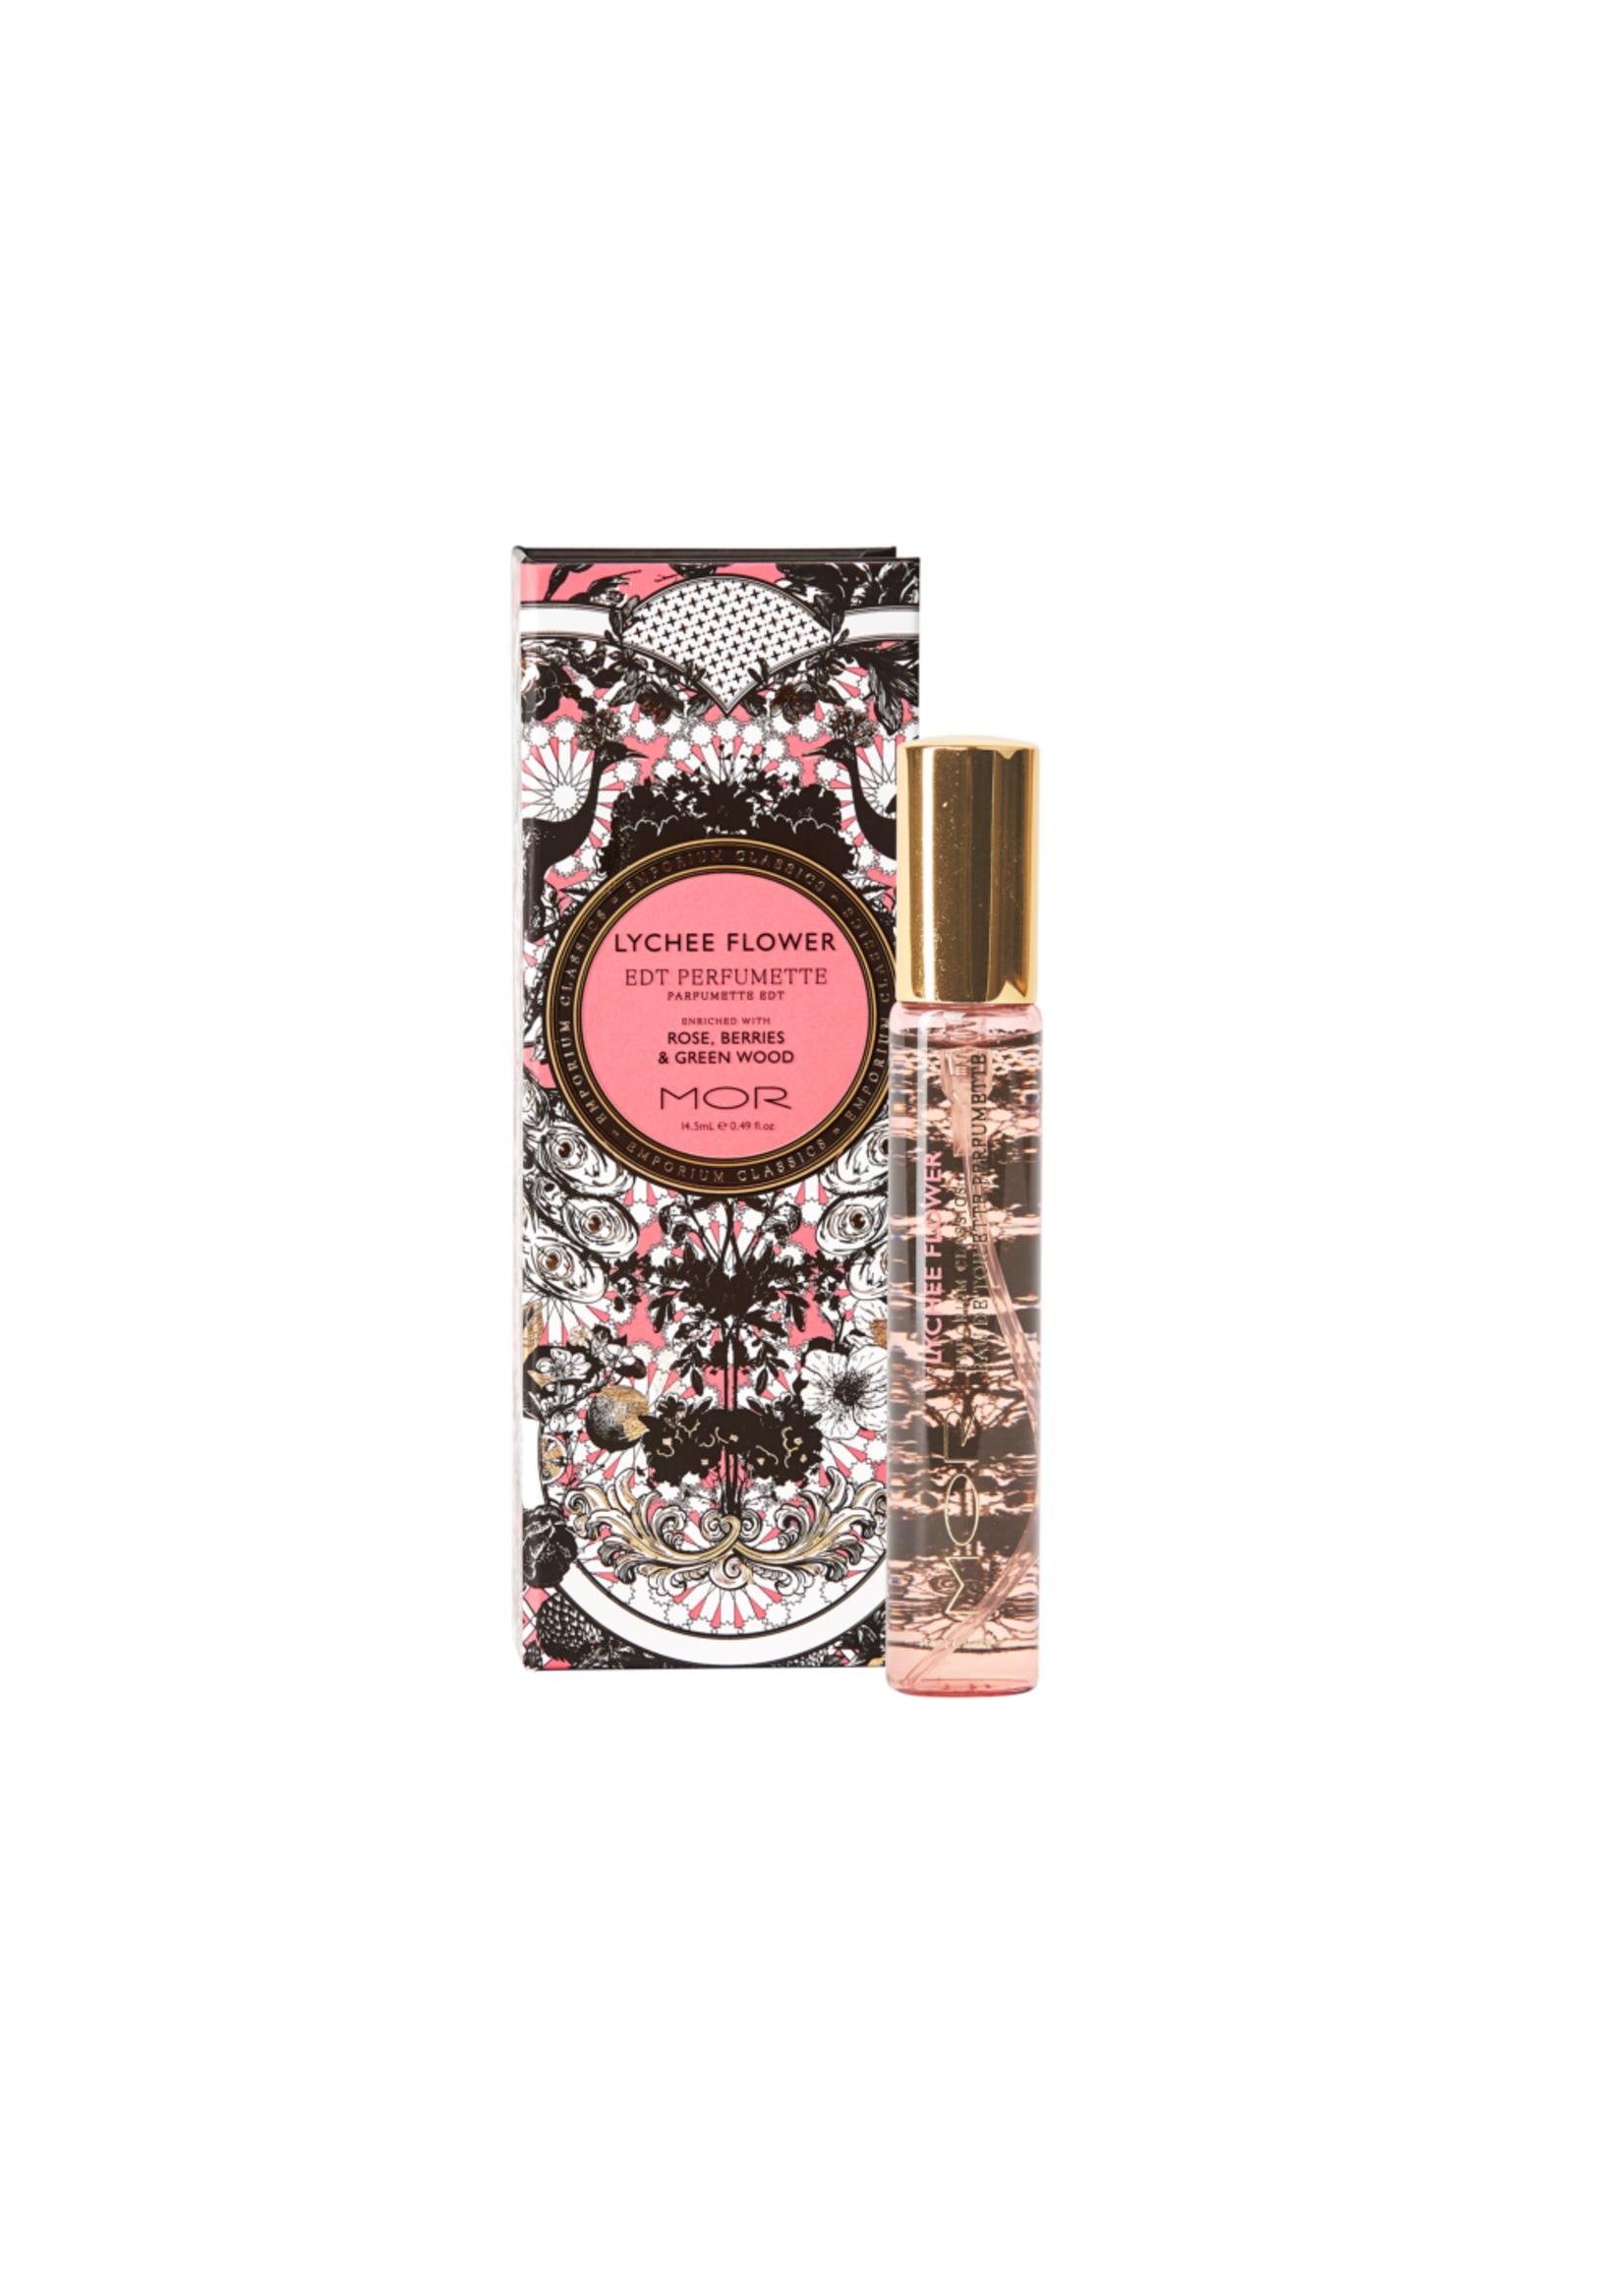 Perfumette 14.5ml Lychee FIower